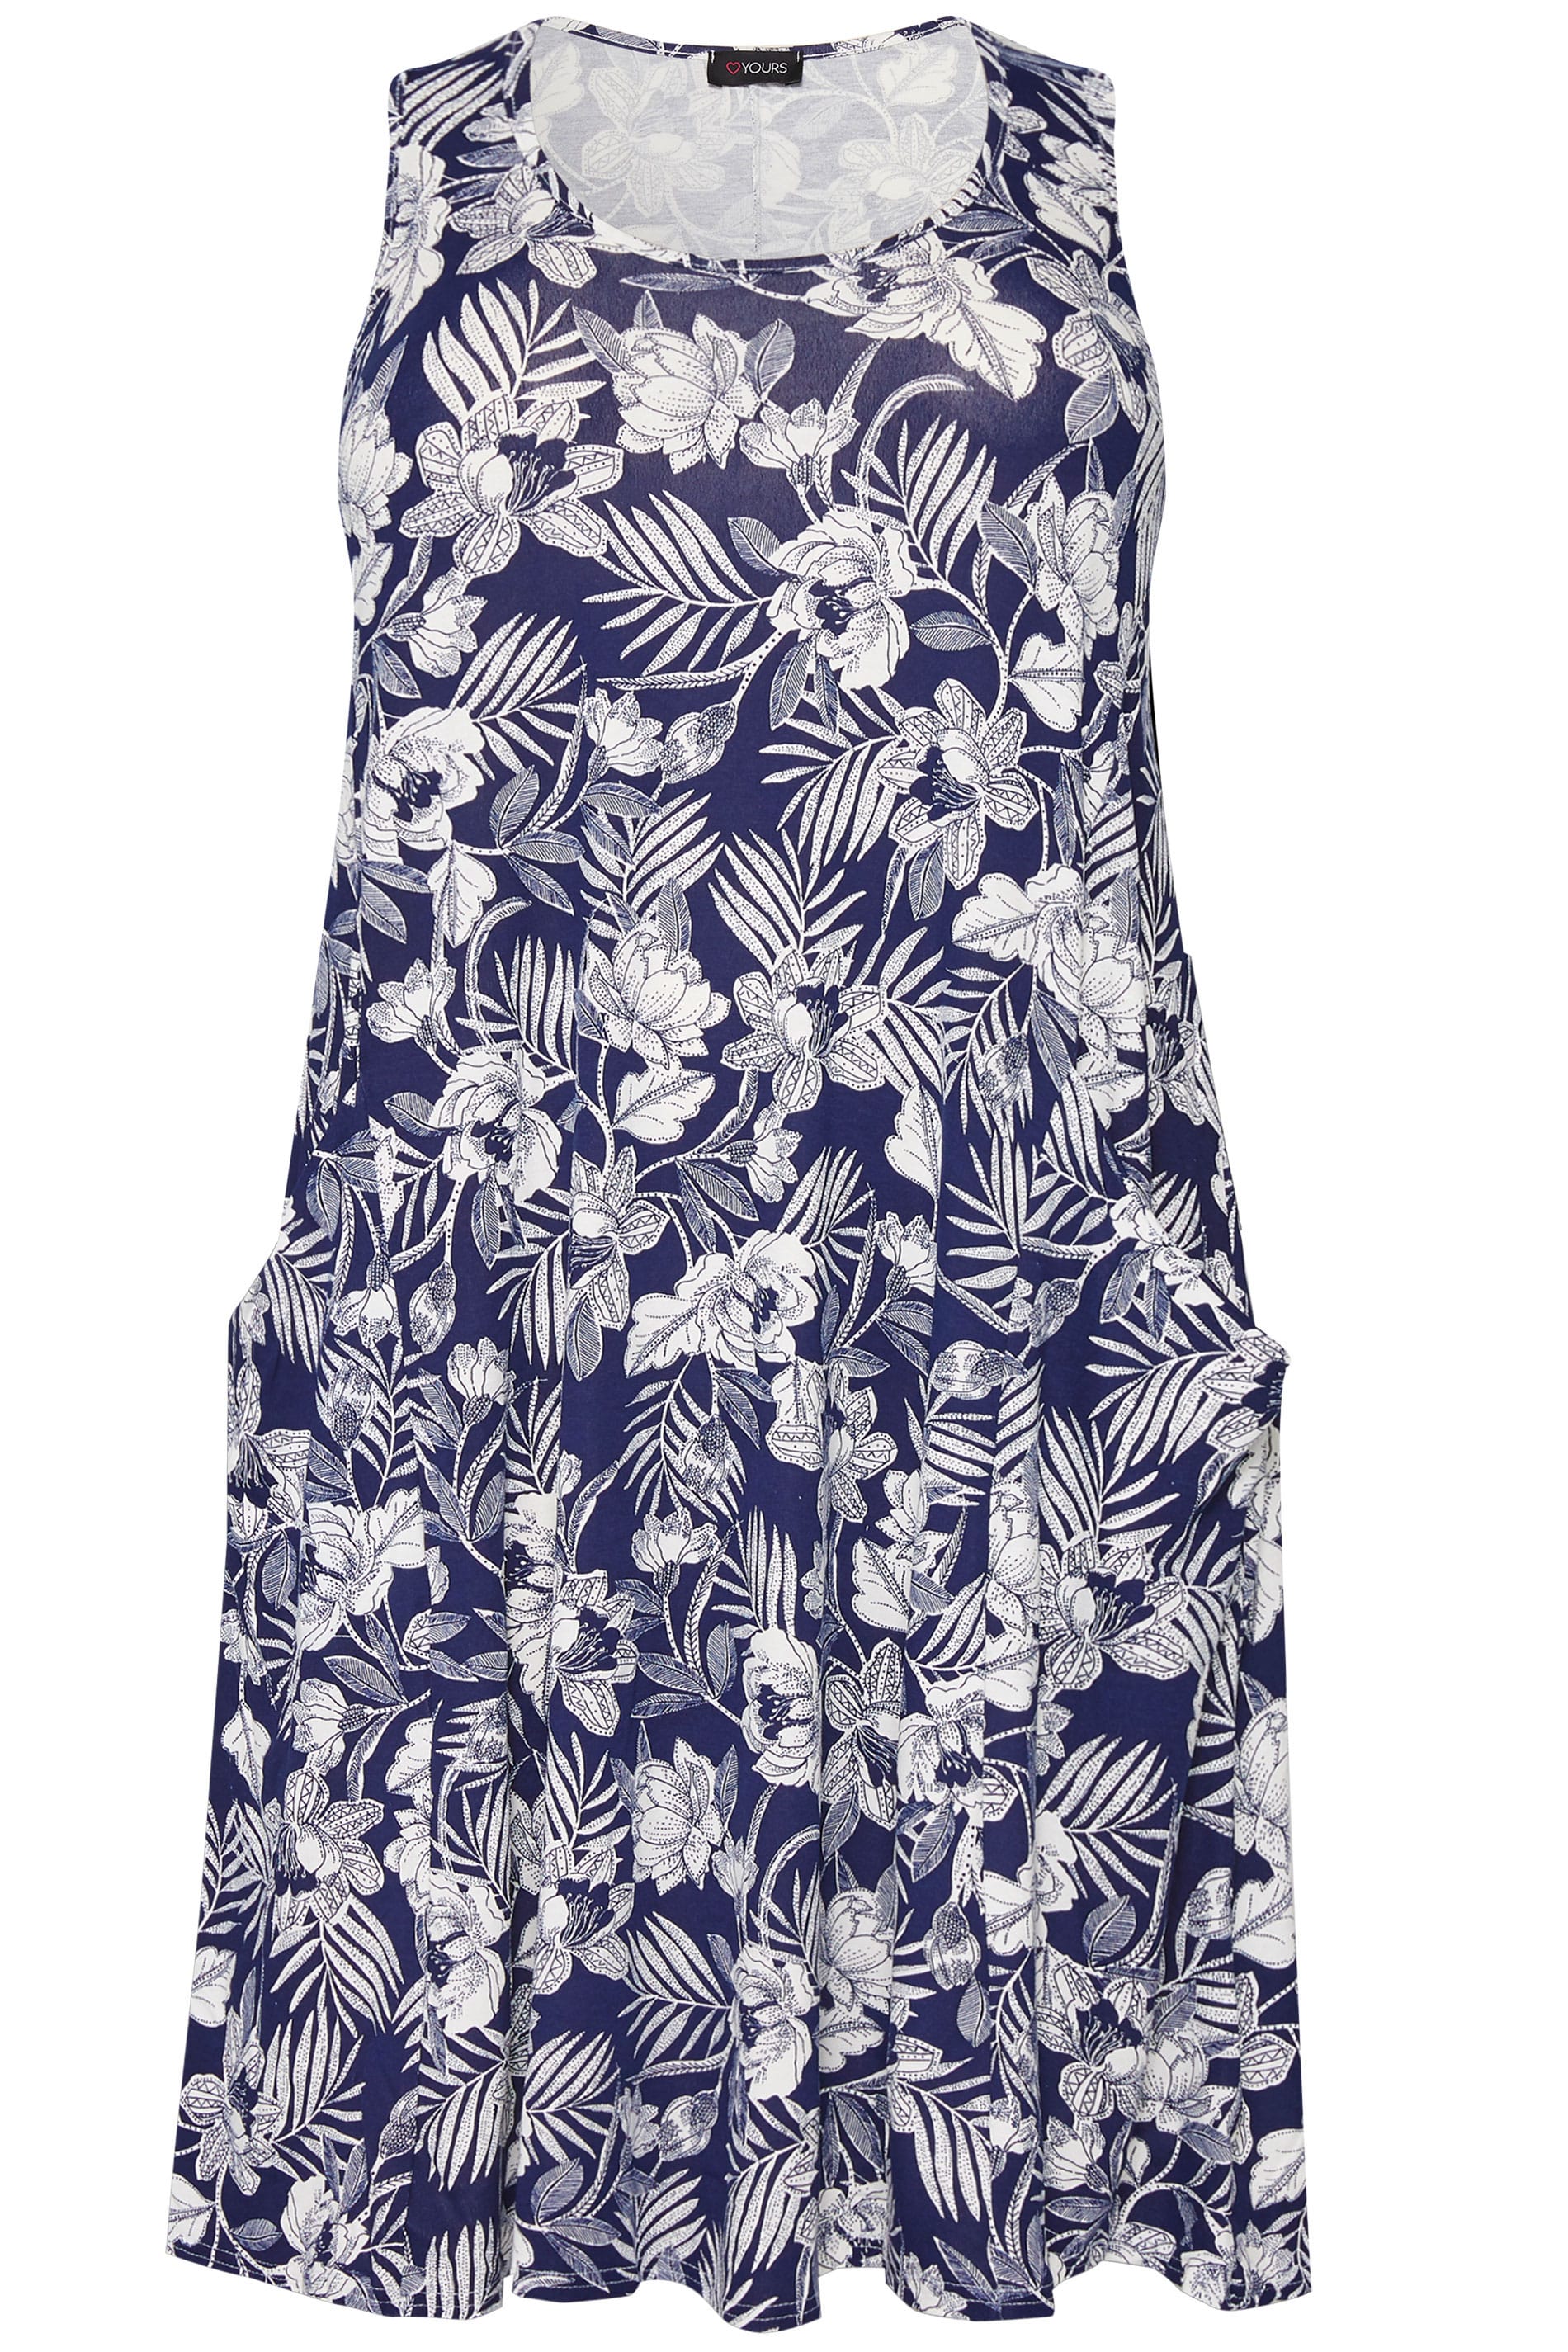 Blue Tropical Sleeveless Drape Pocket Dress | Yours Clothing